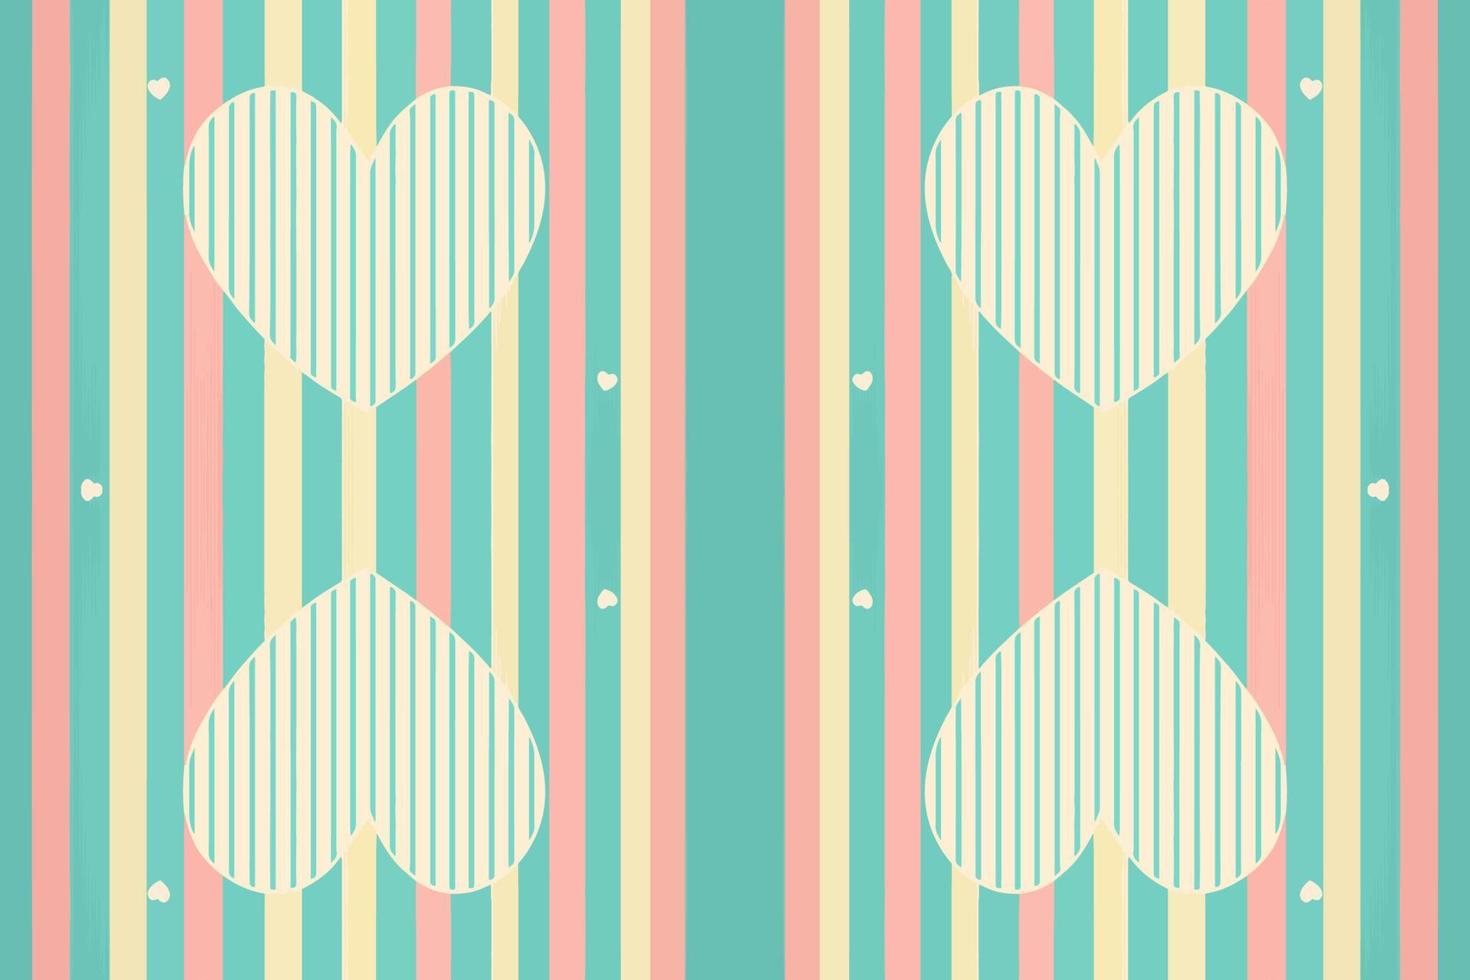 geométrico sencillo rayas con corazón modelo brillante pastel antecedentes. resumen gráfico línea moderno elegante mínimo retro estilo. diseño para tela textura textil impresión Arte antecedentes fondo de pantalla. vector